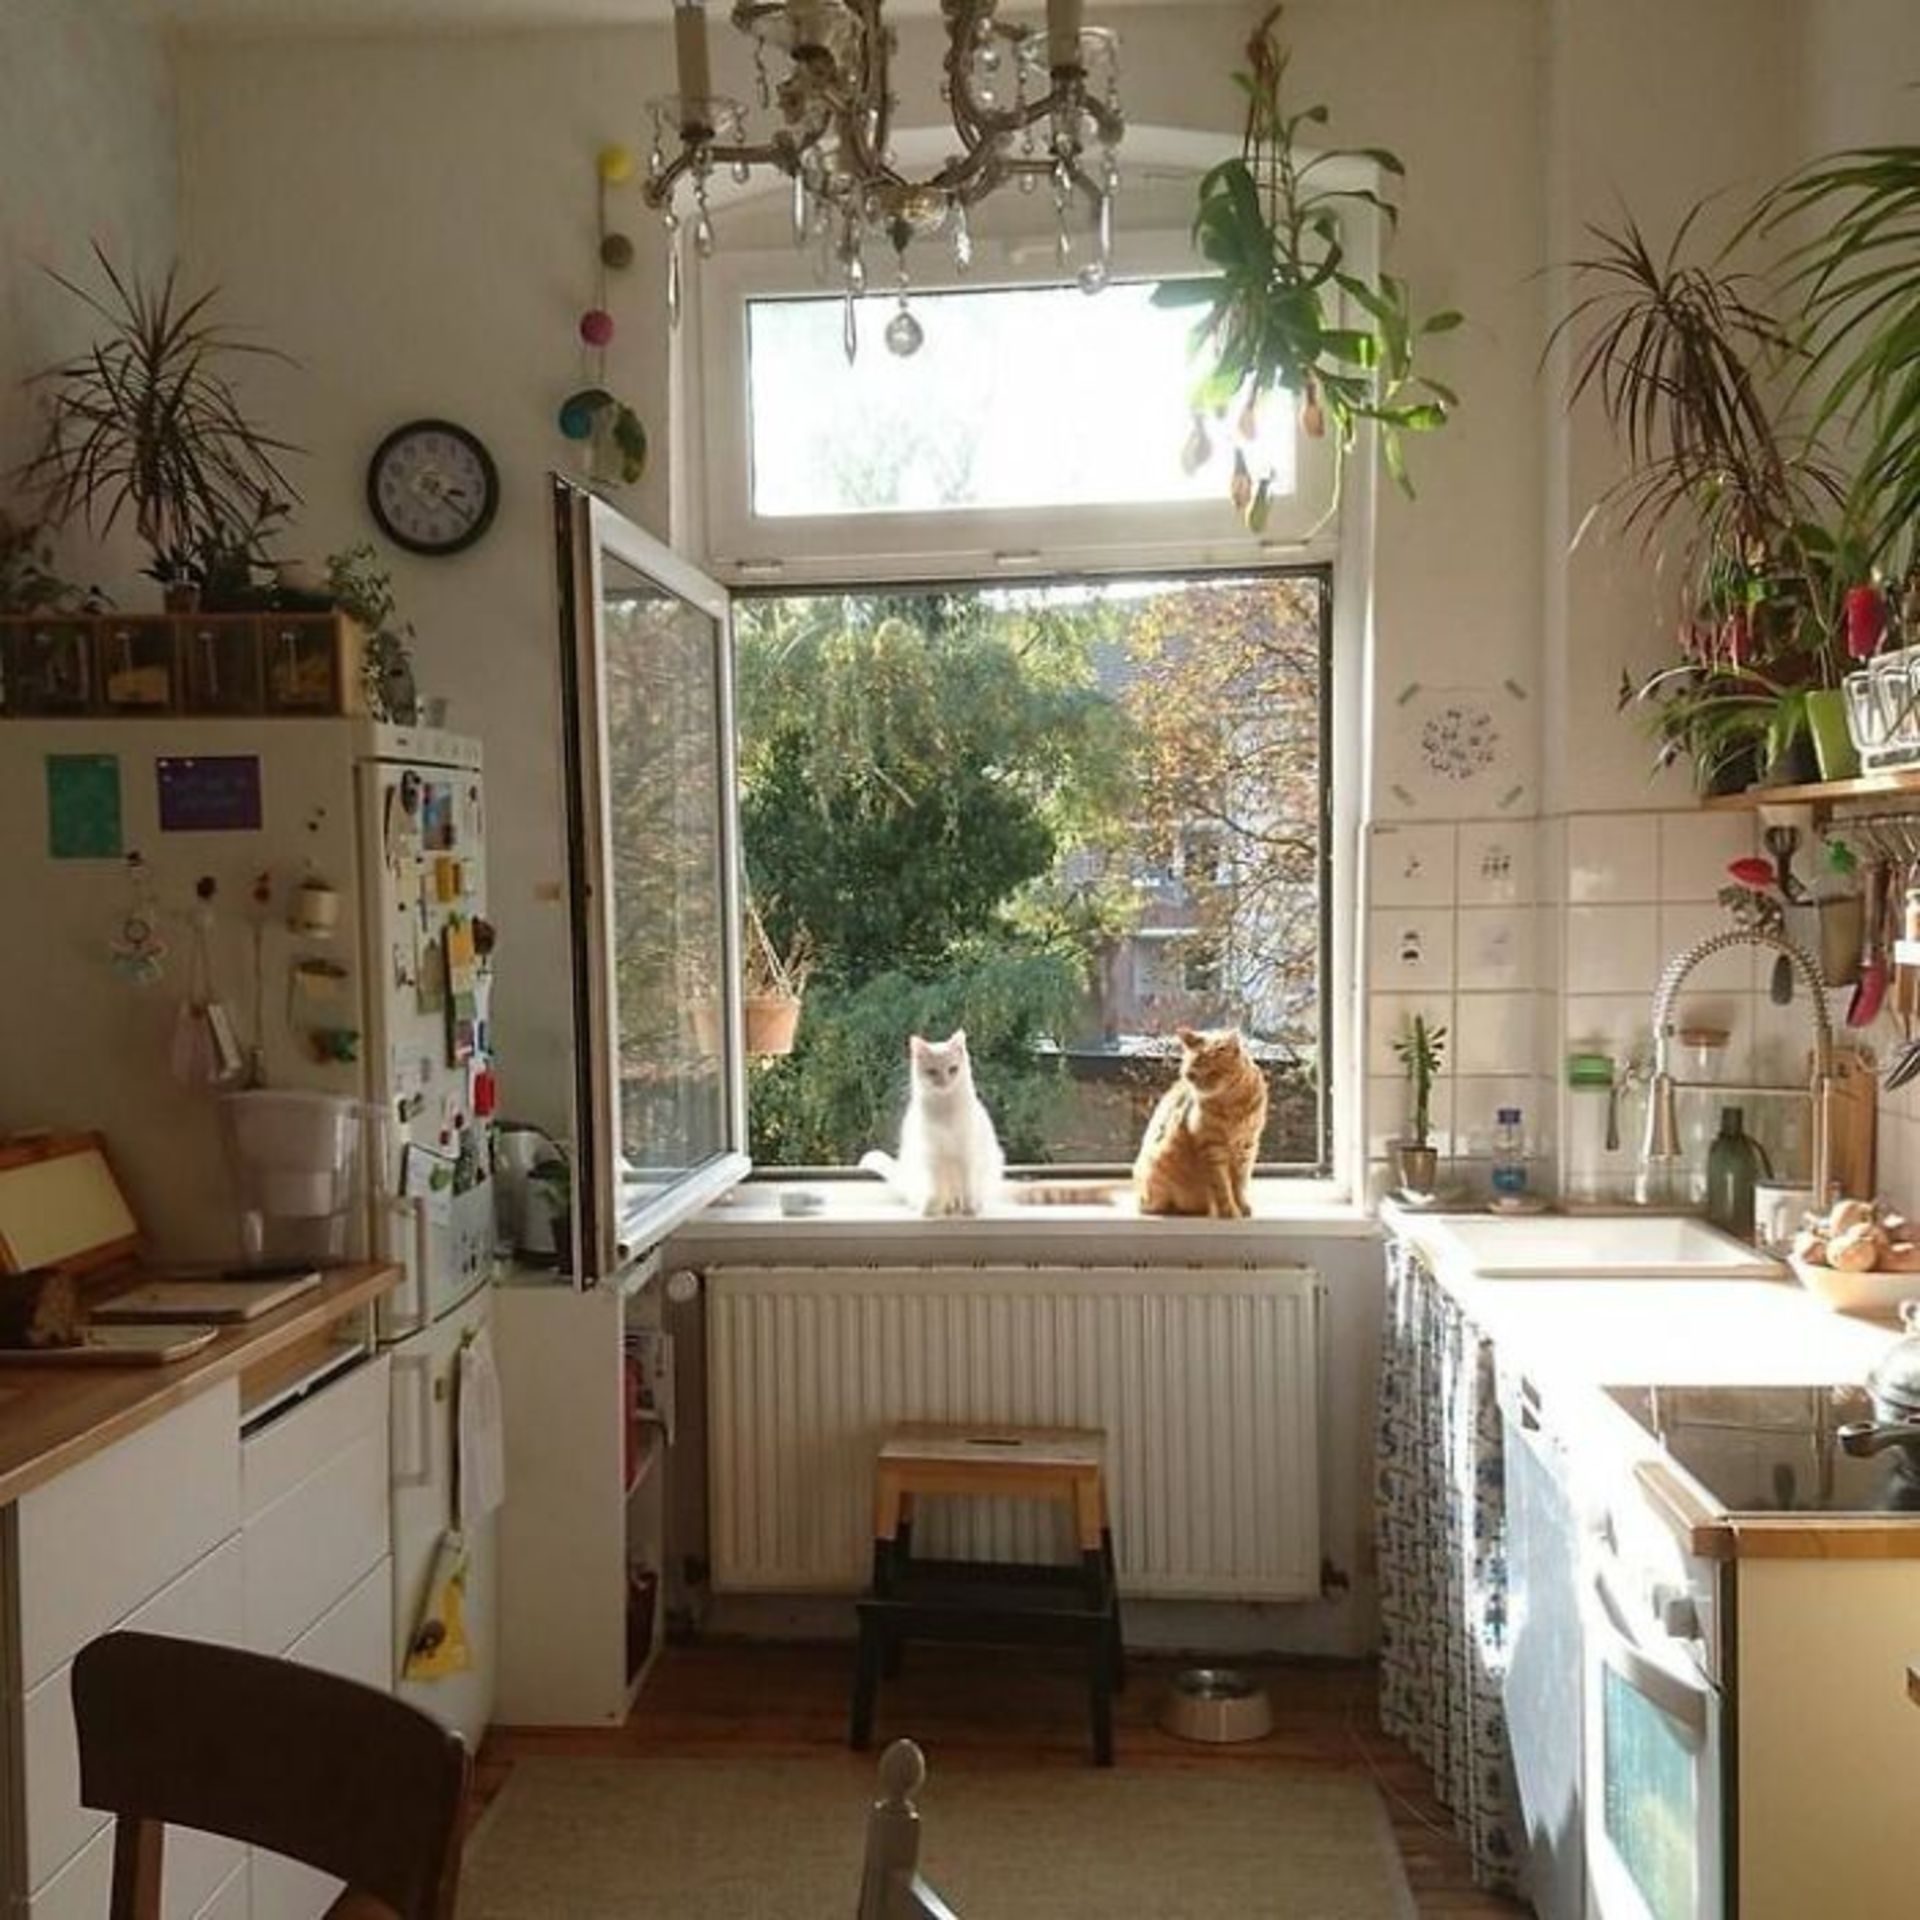 دو گربه روبه‌رو پنجره آشپزخانه 